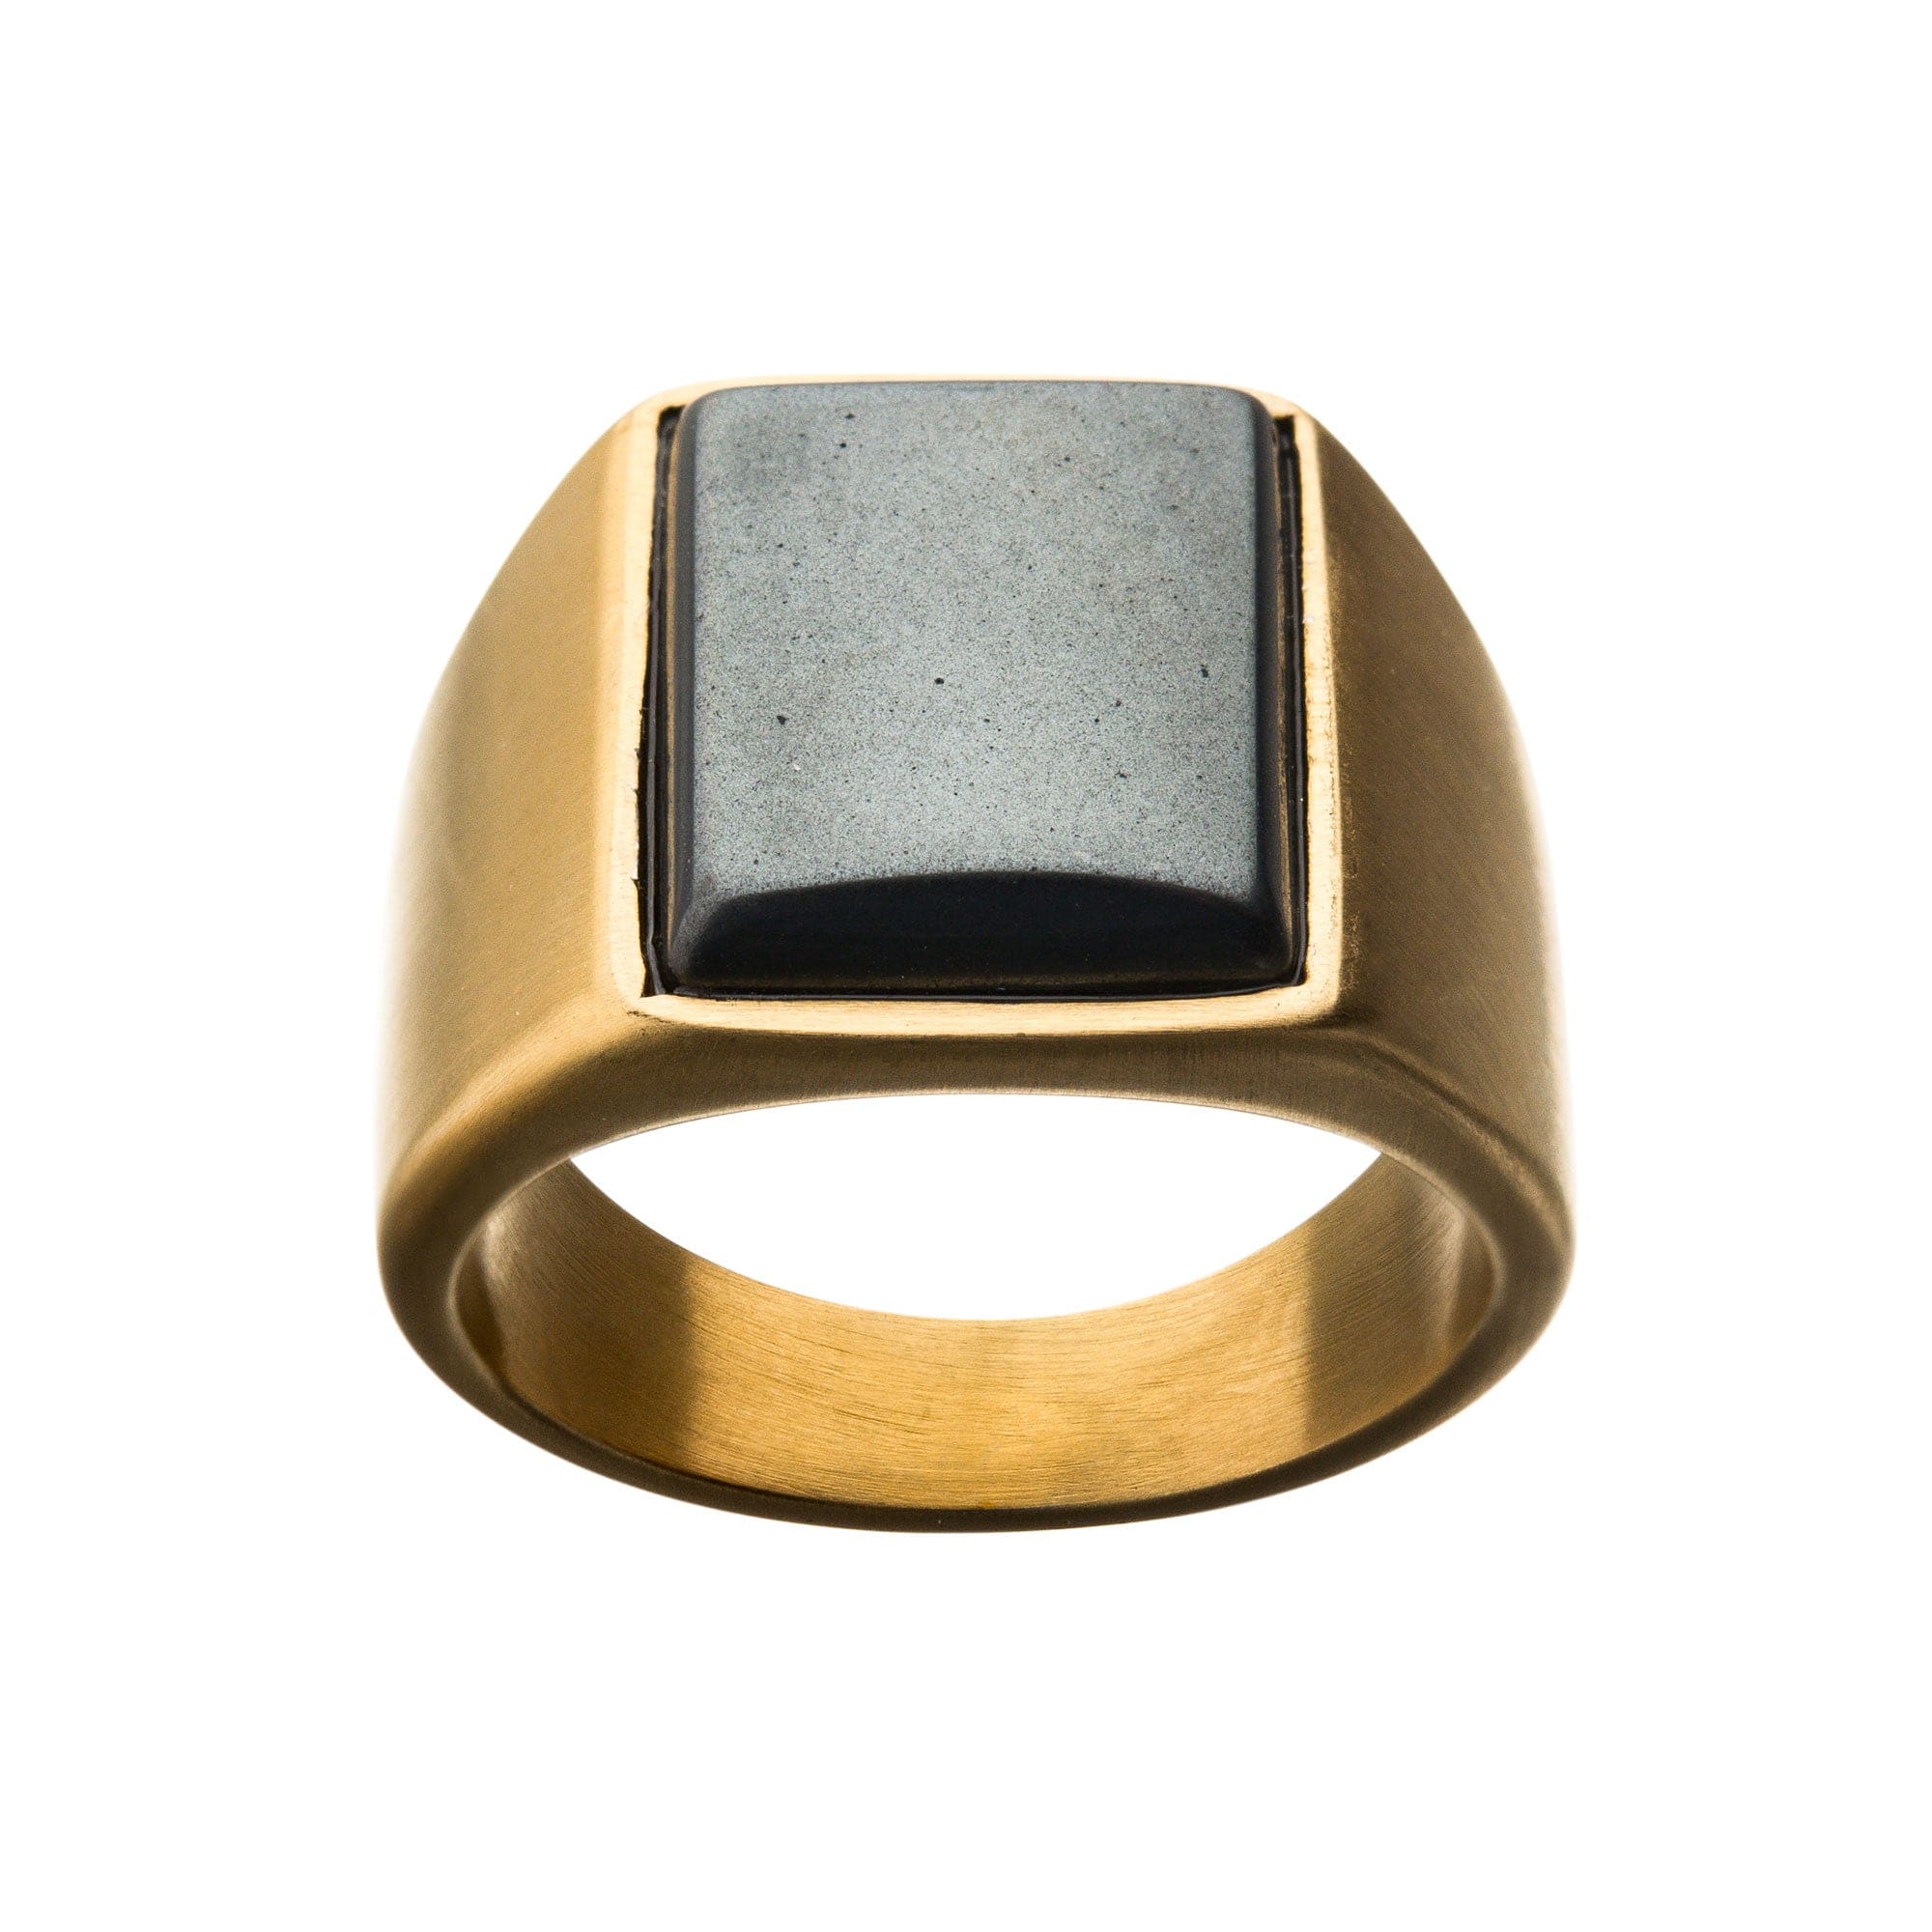 INOX JEWELRY Rings Golden Tone Stainless Steel Stonehenge Collection Matte and Polish Finish Black Hematite Signet Ring